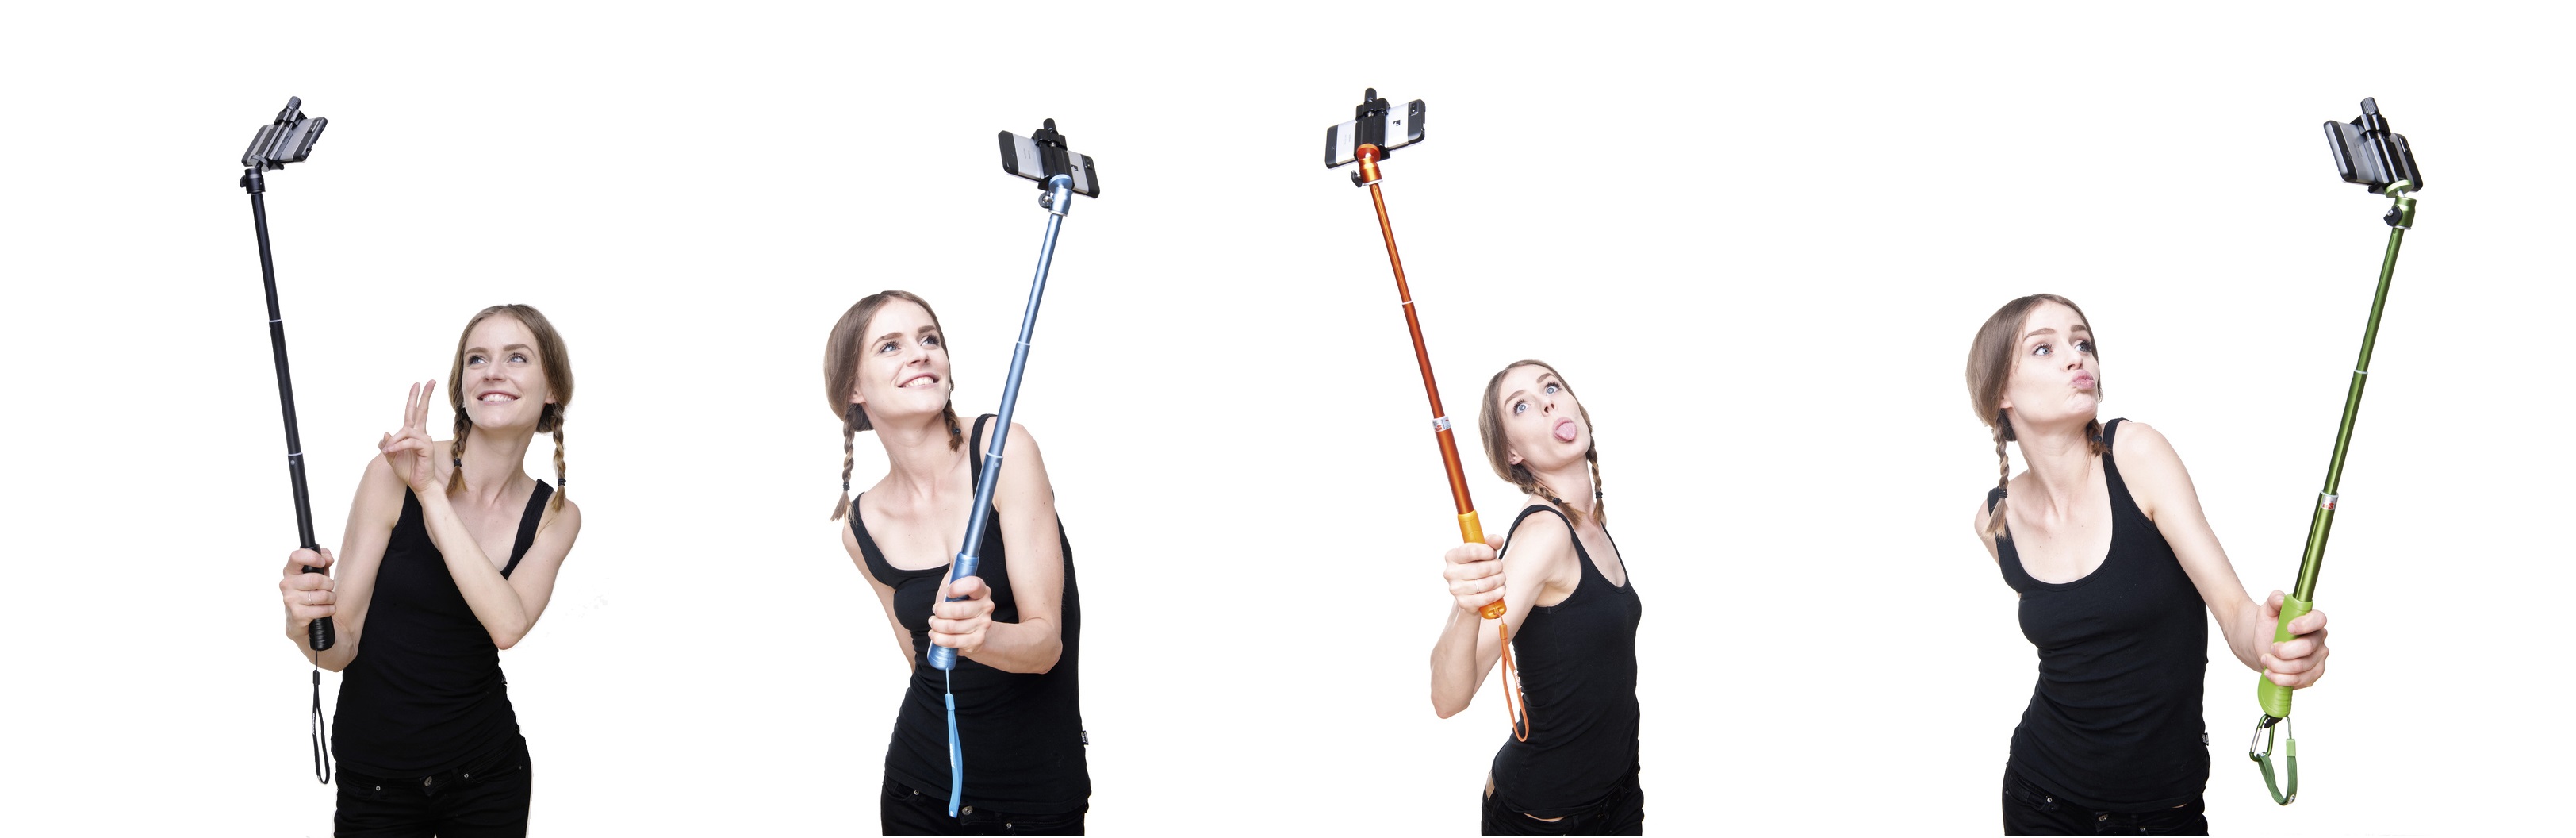  Držiak Rollei tyčka pre fotenie Selfie fotiek 